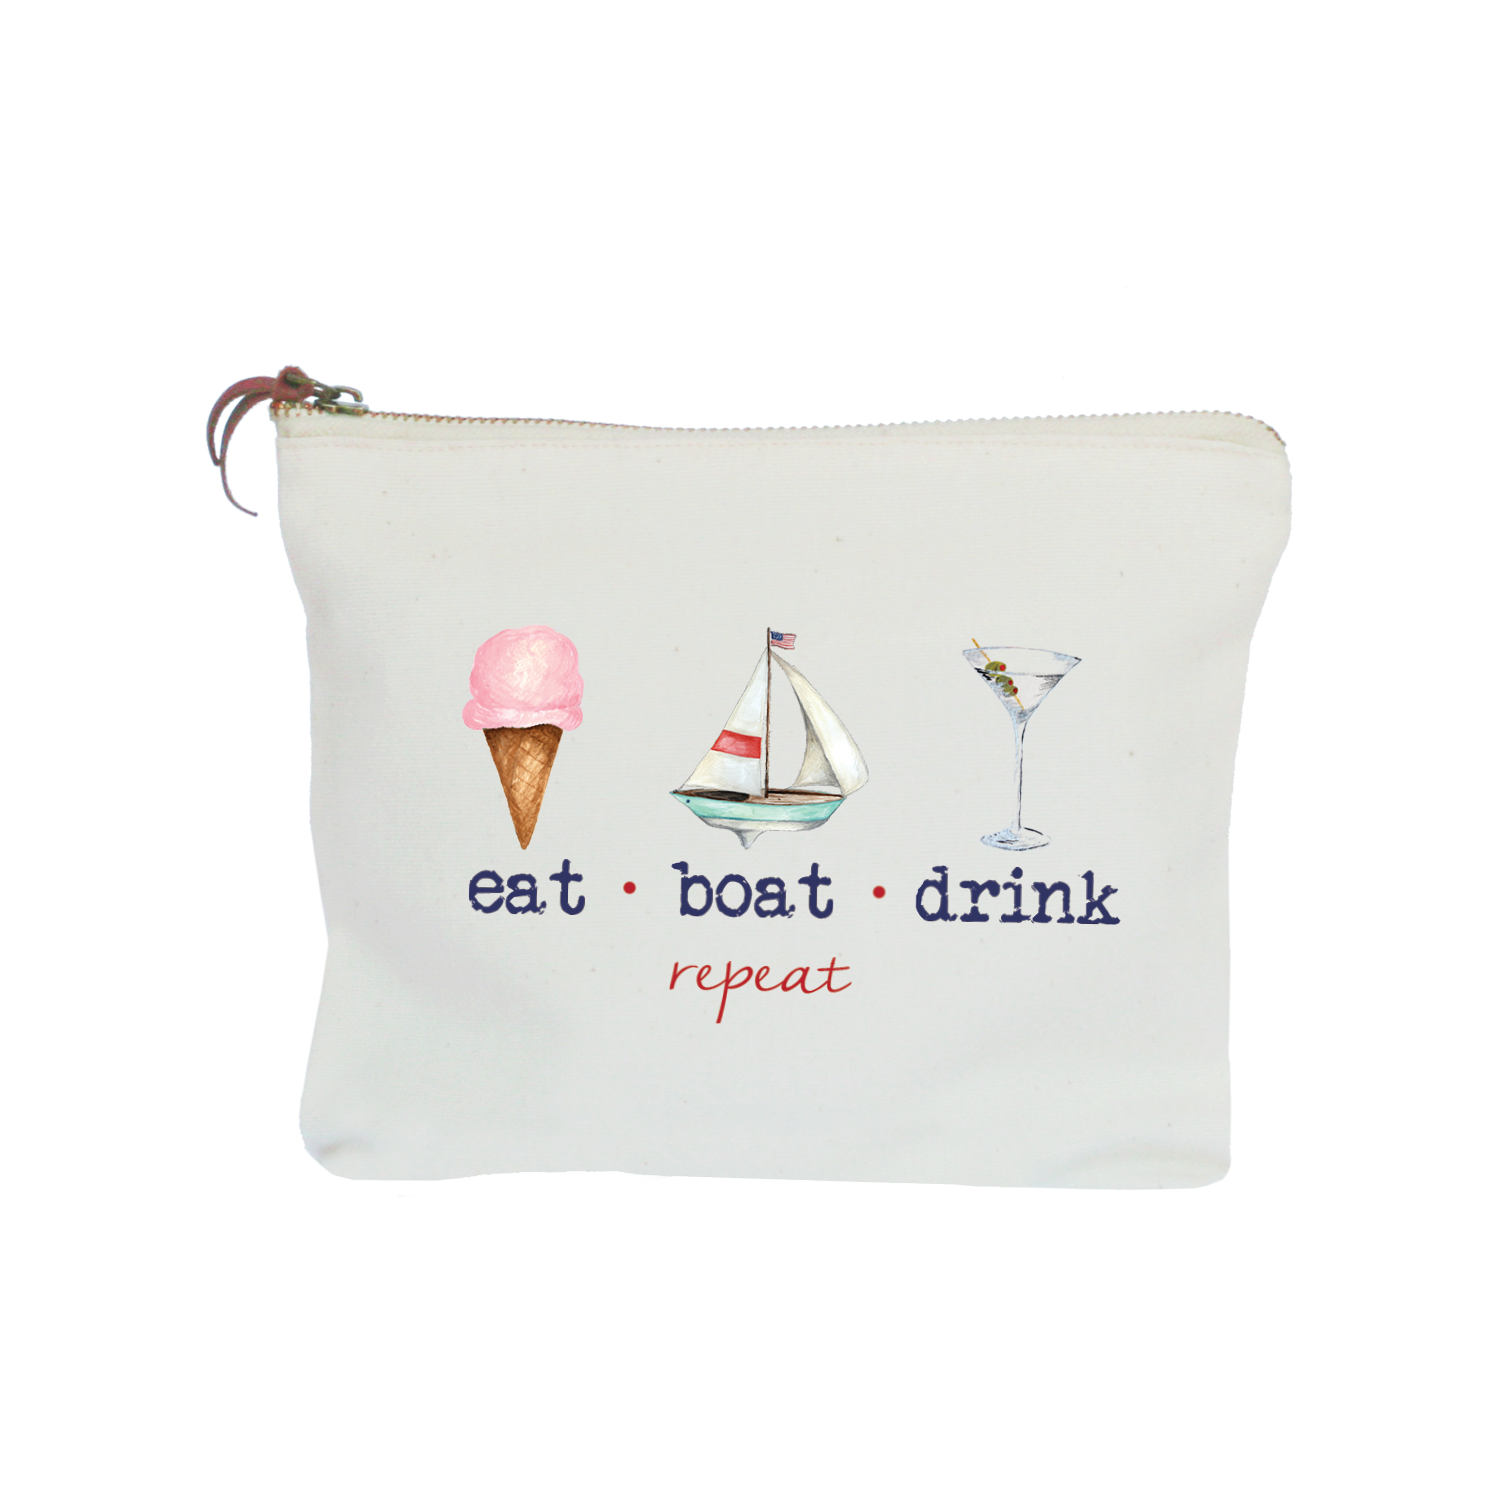 eat boat drink repeat zipper pouch